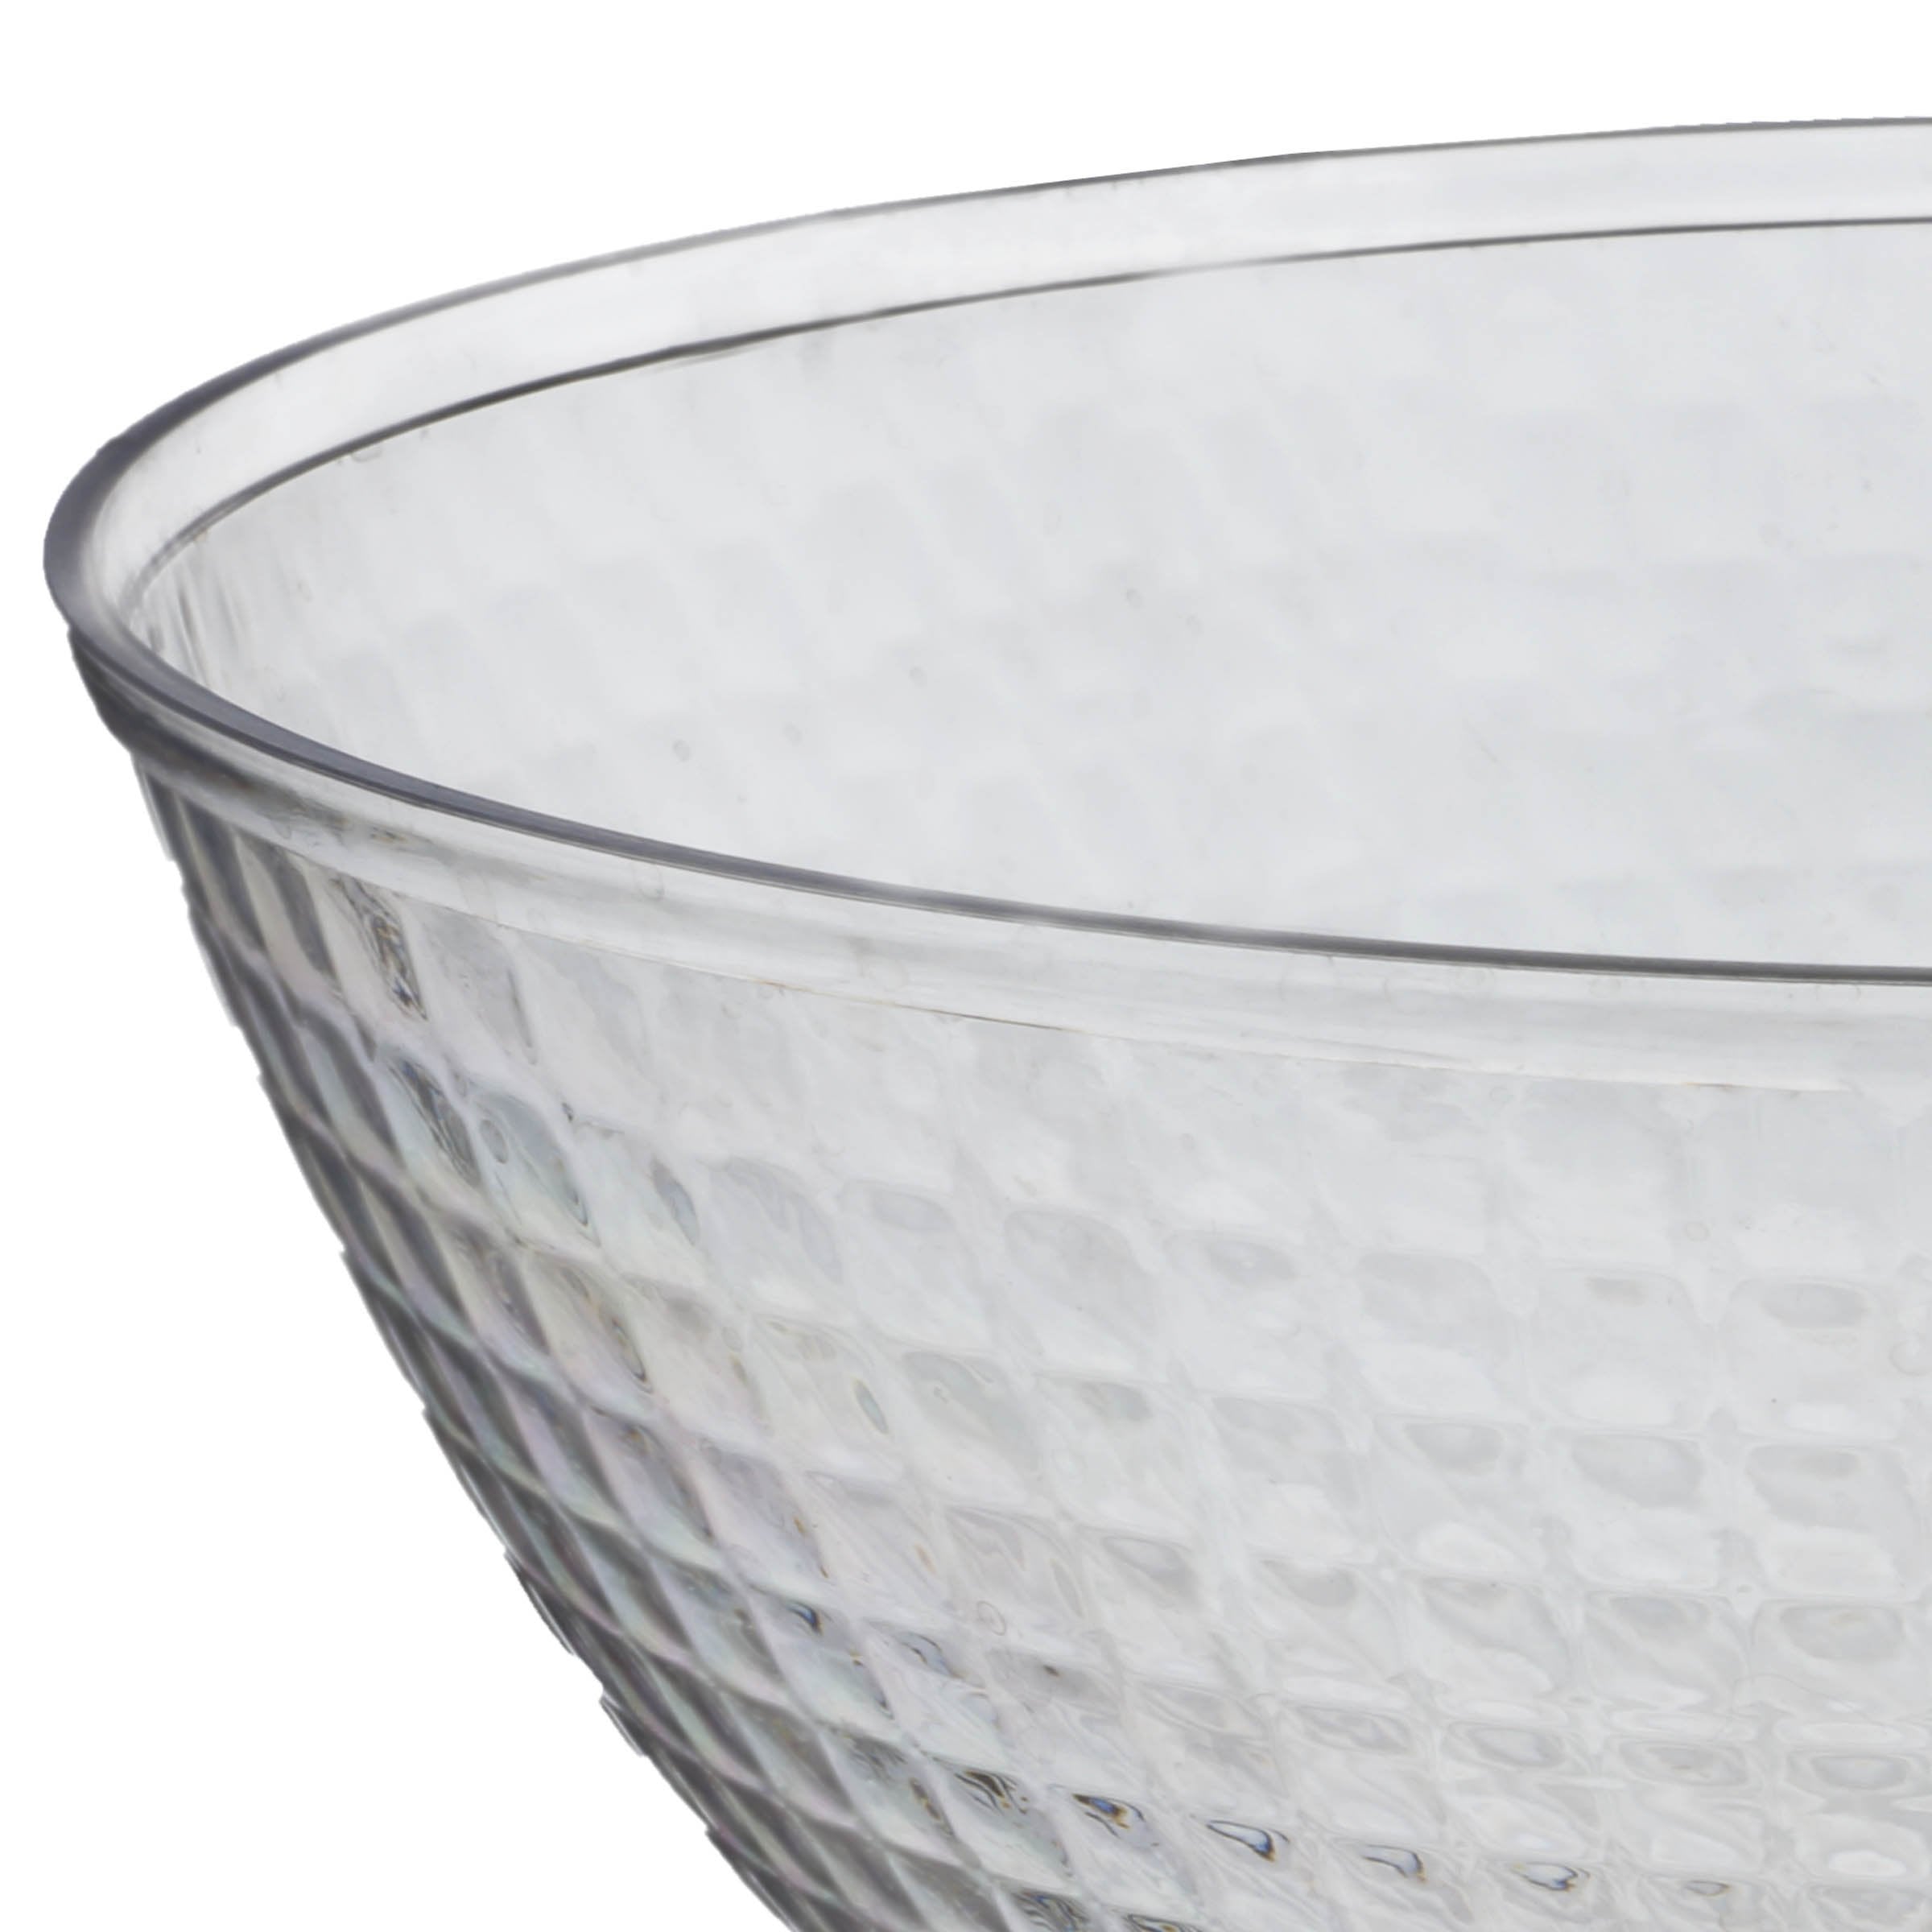 4 pcs 2 qt Disposable Textured Clear Plastic Serving Bowls